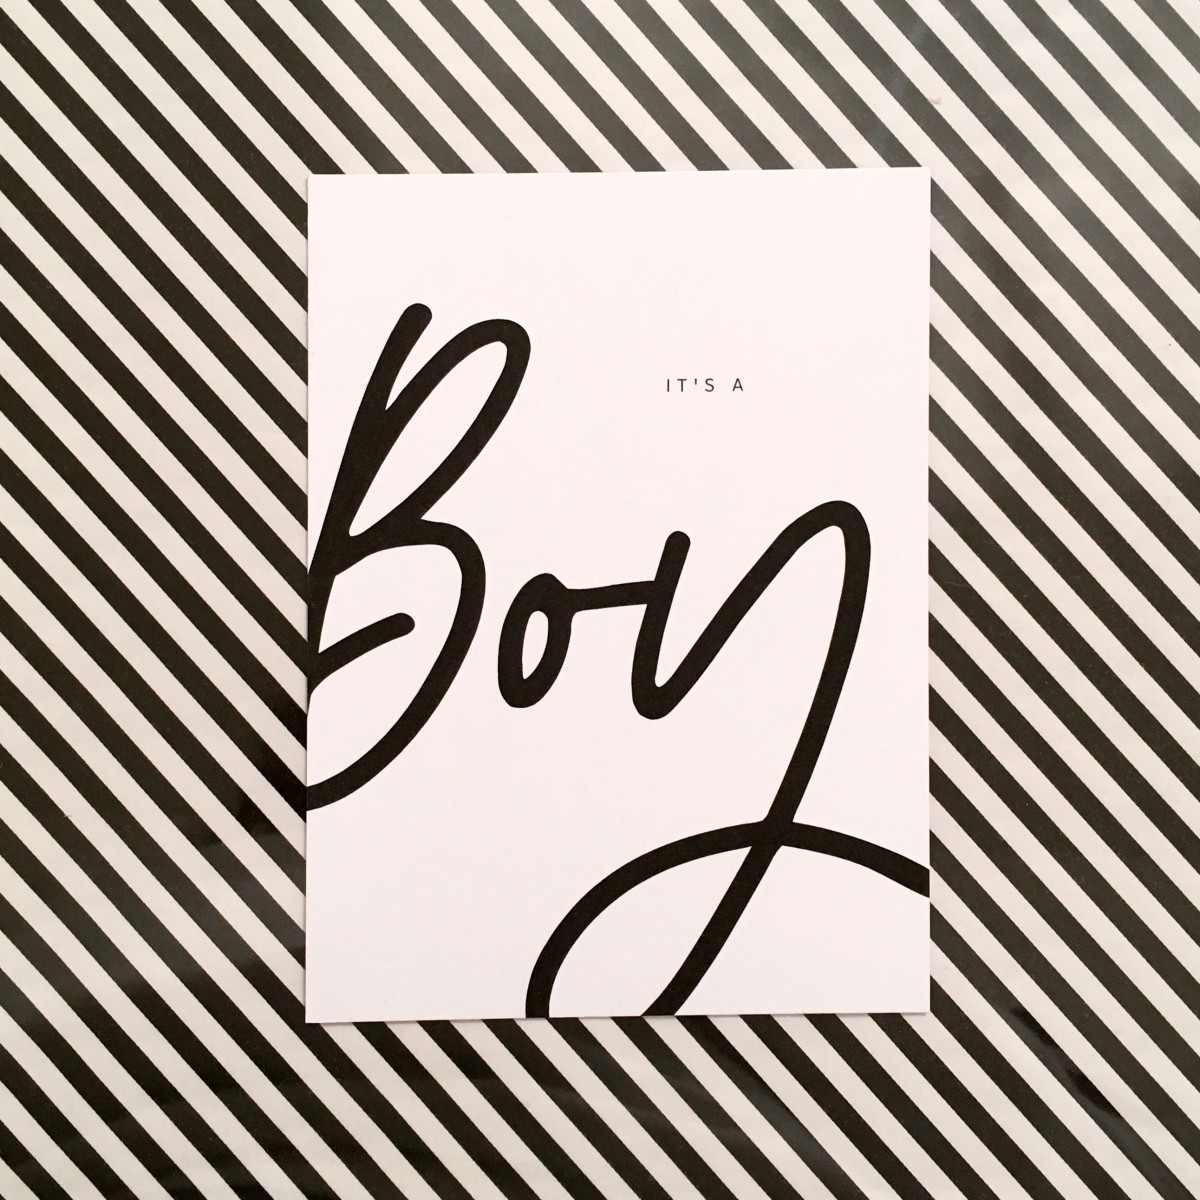 Love is the new black – Postkarten-Set "Baby"